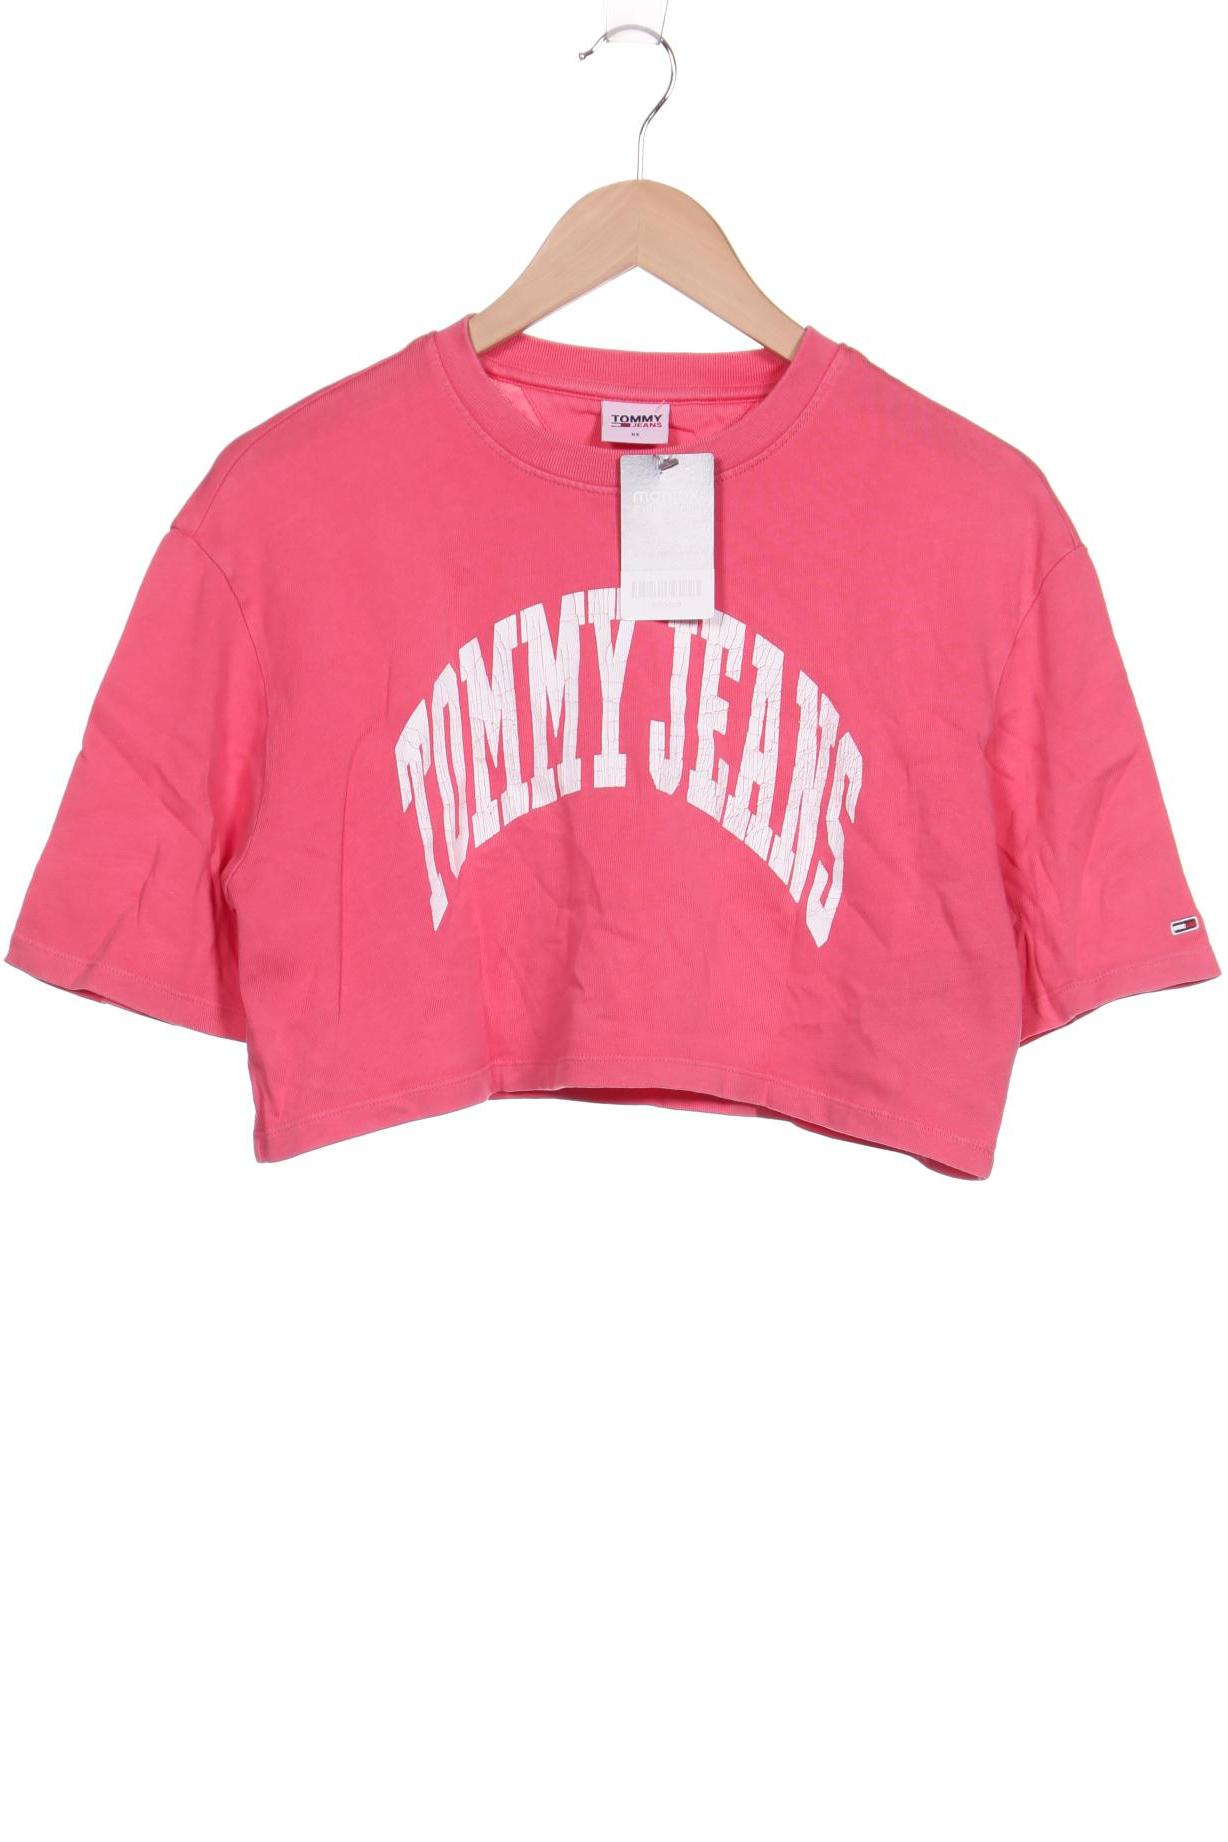 Tommy Jeans Damen T-Shirt, pink von Tommy Jeans